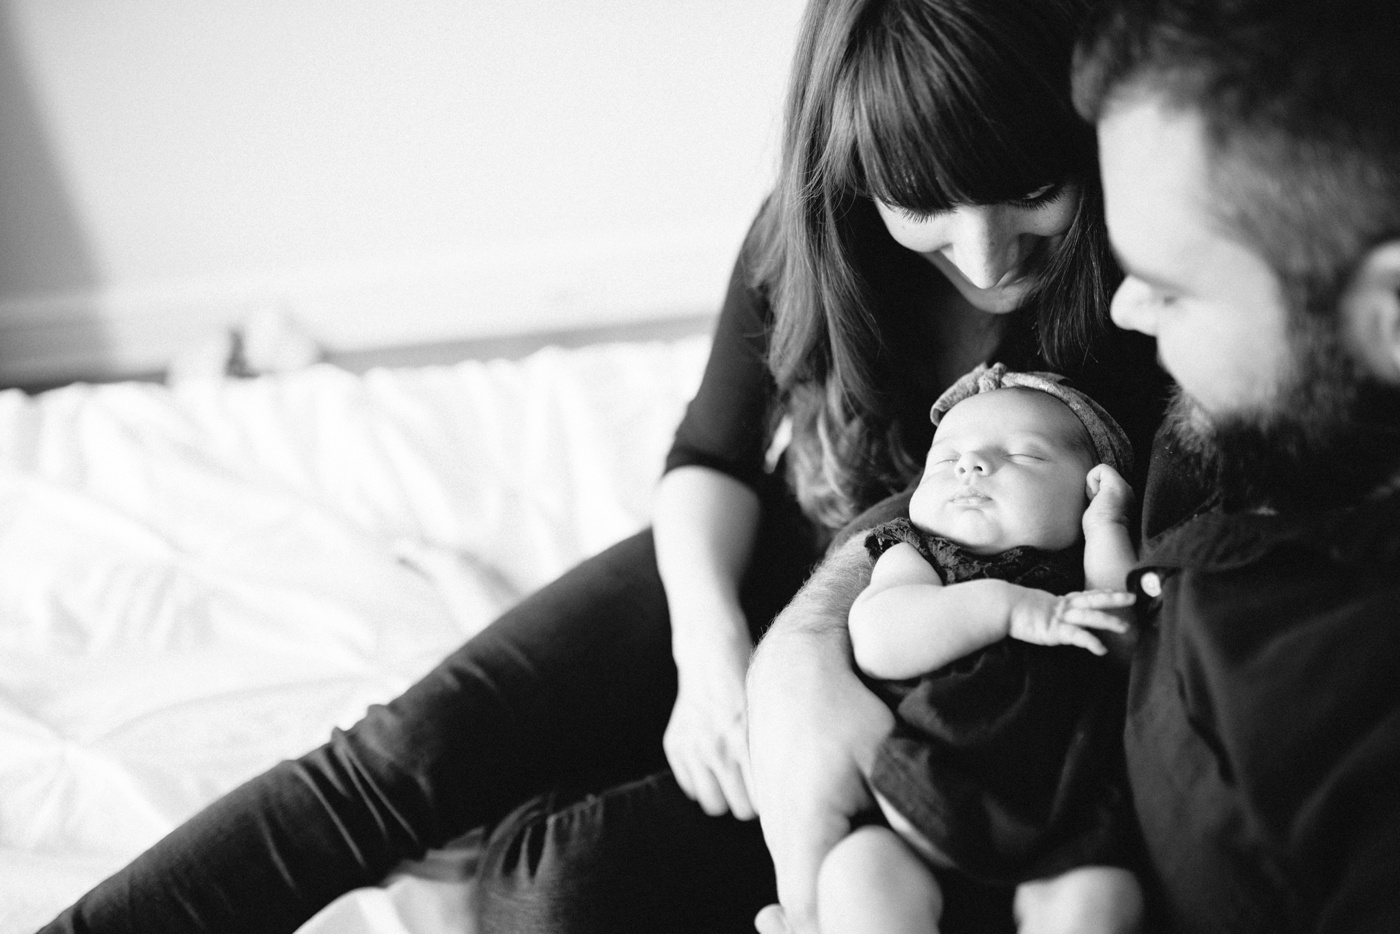 Blaise + Kaylin + Adelaide - Lifestyle Newborn Session - Philadelphia Photographer - Alison Dunn Photography